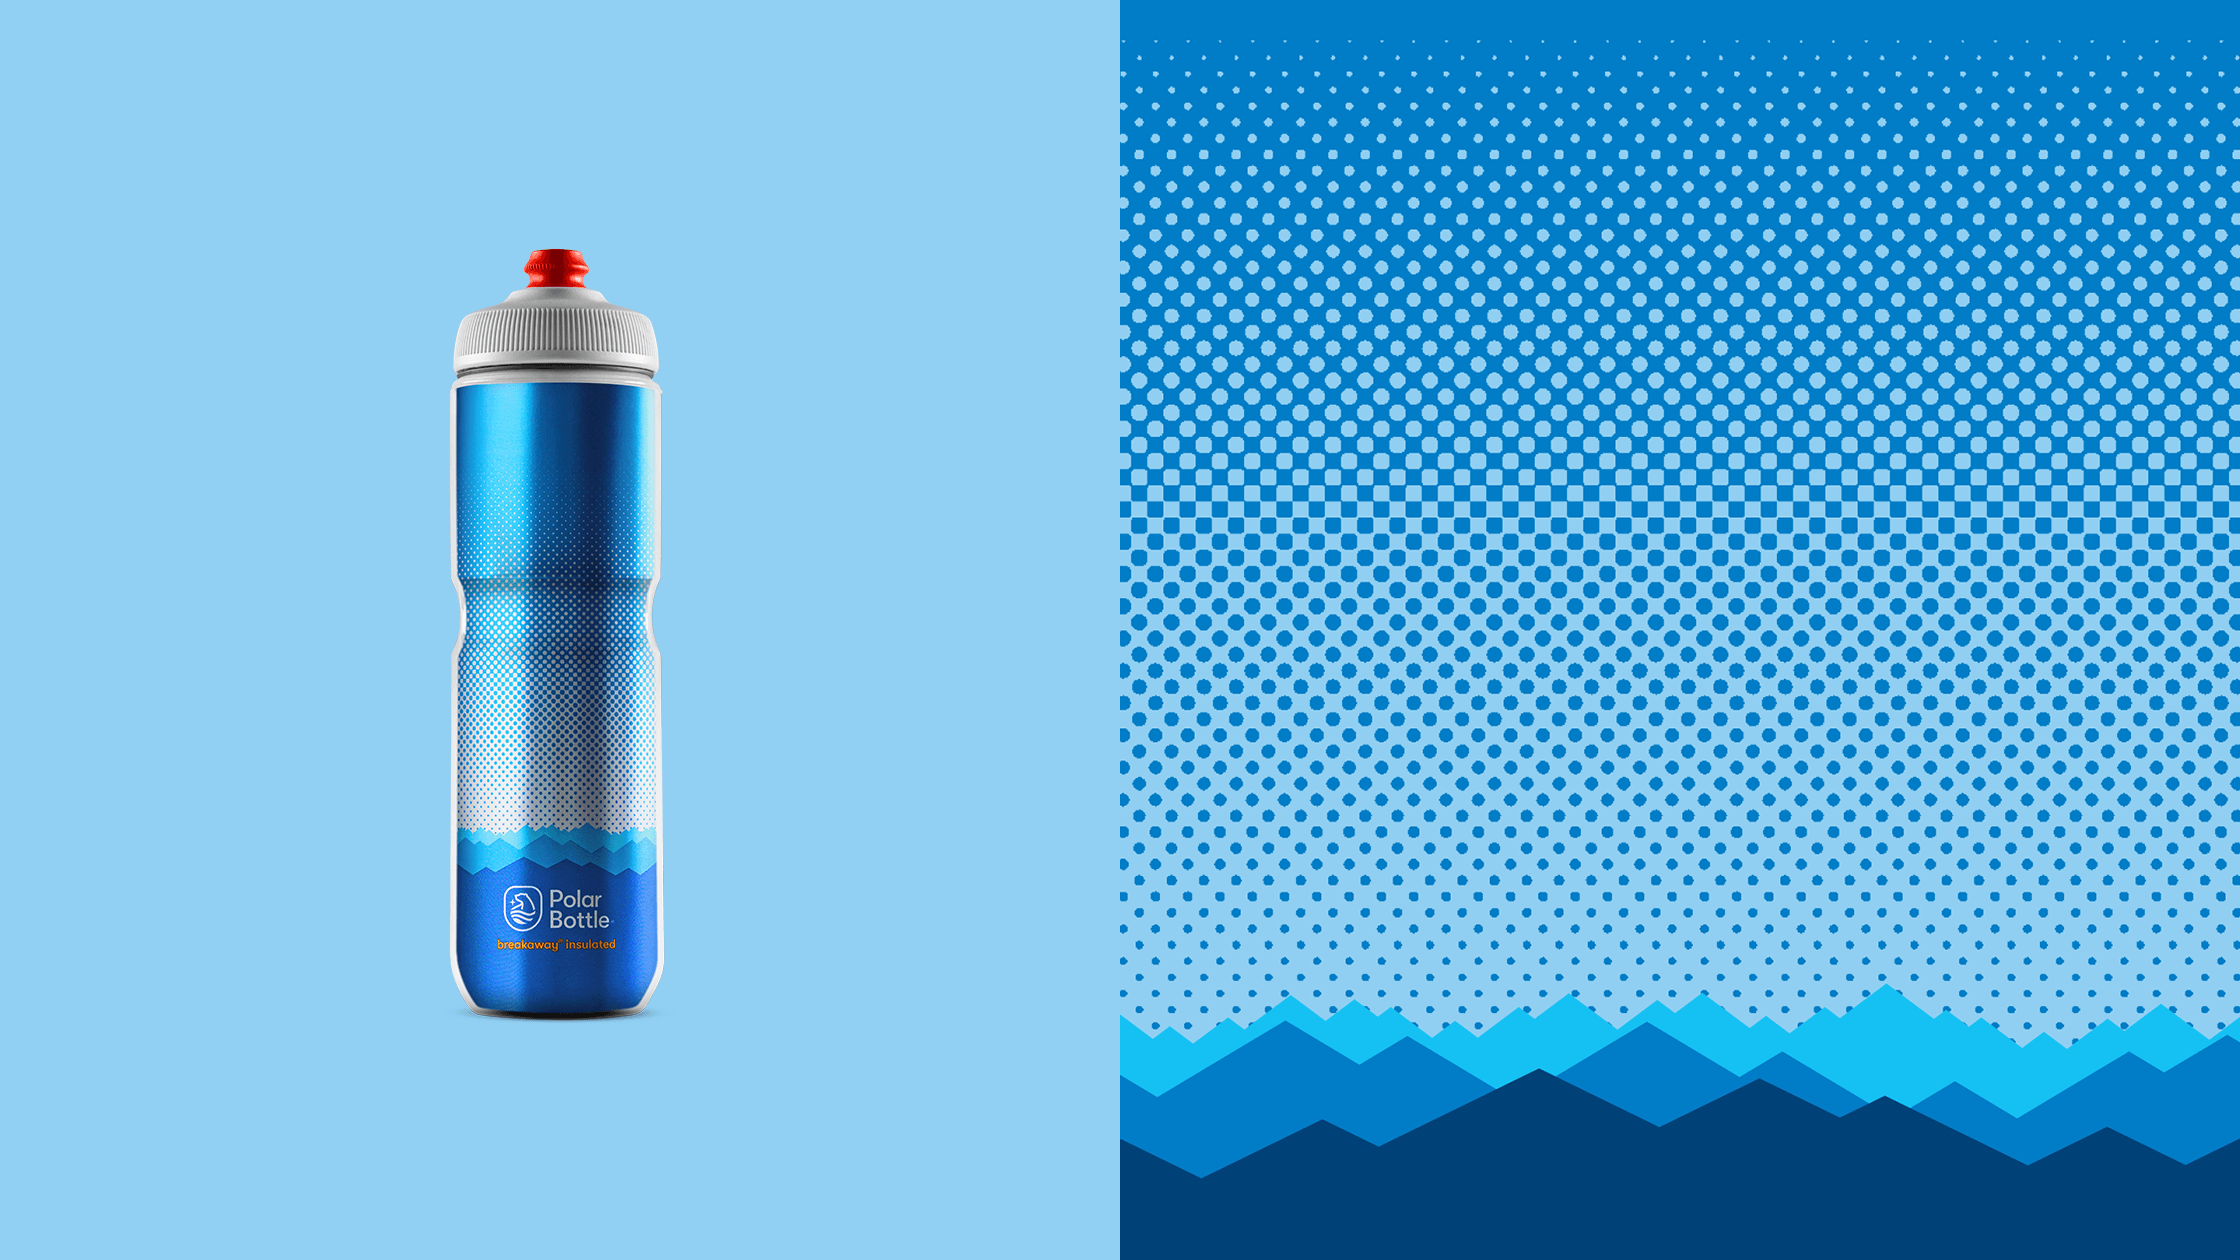 Polar Bottle Ridge Bottle Product Graphics